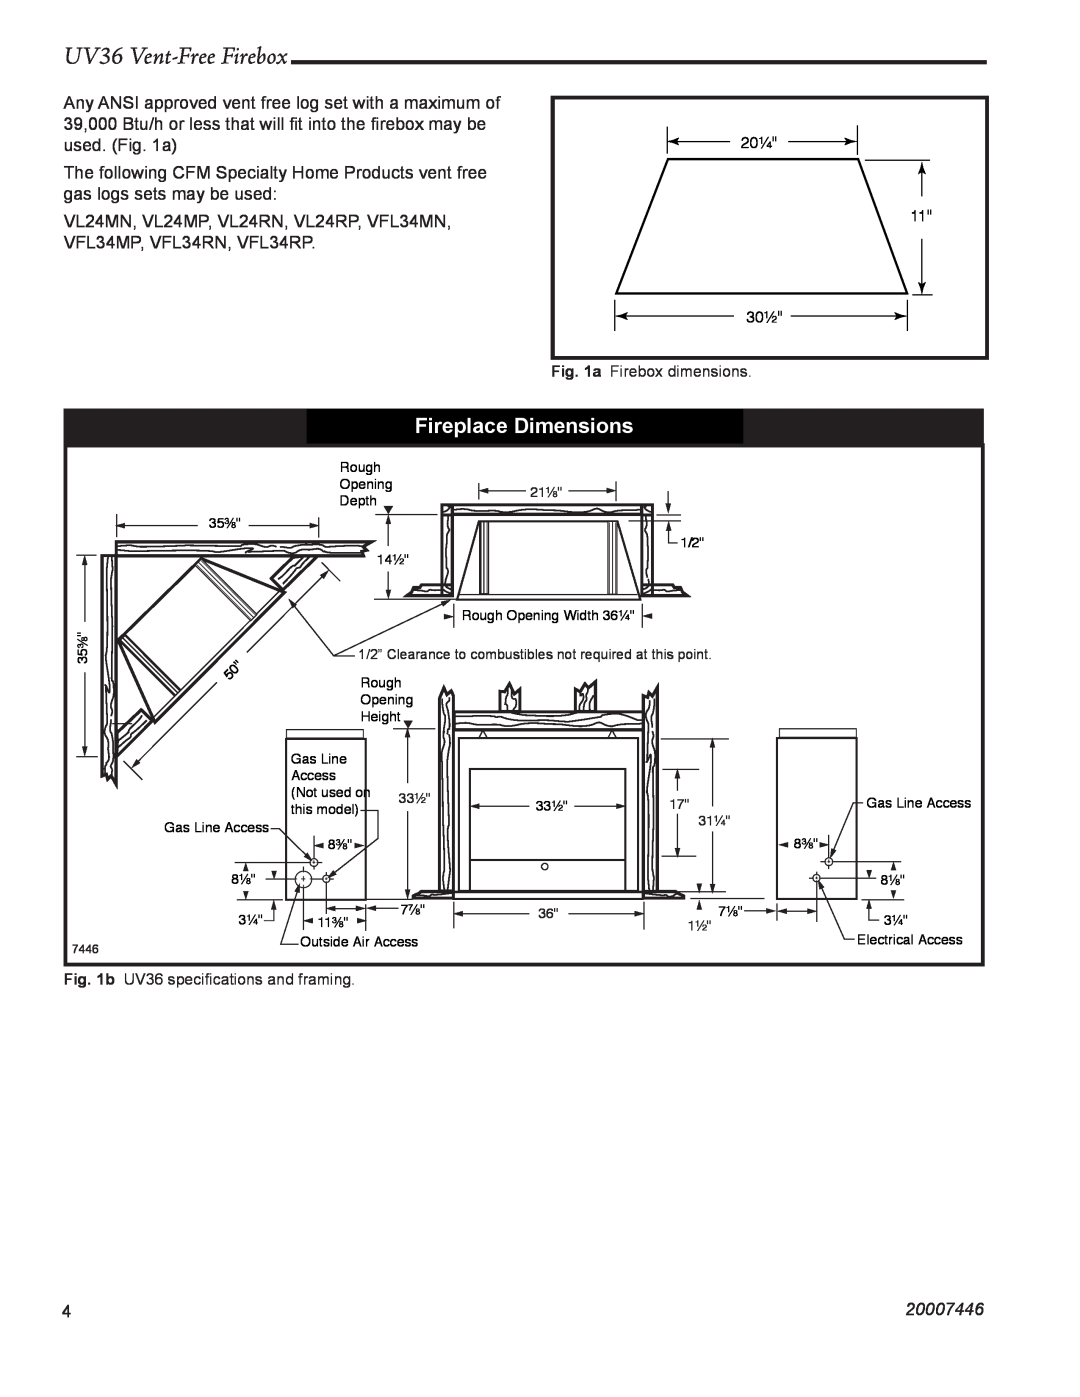 Majestic Appliances installation instructions Fireplace Dimensions, UV36 Vent-FreeFirebox, 20007446 